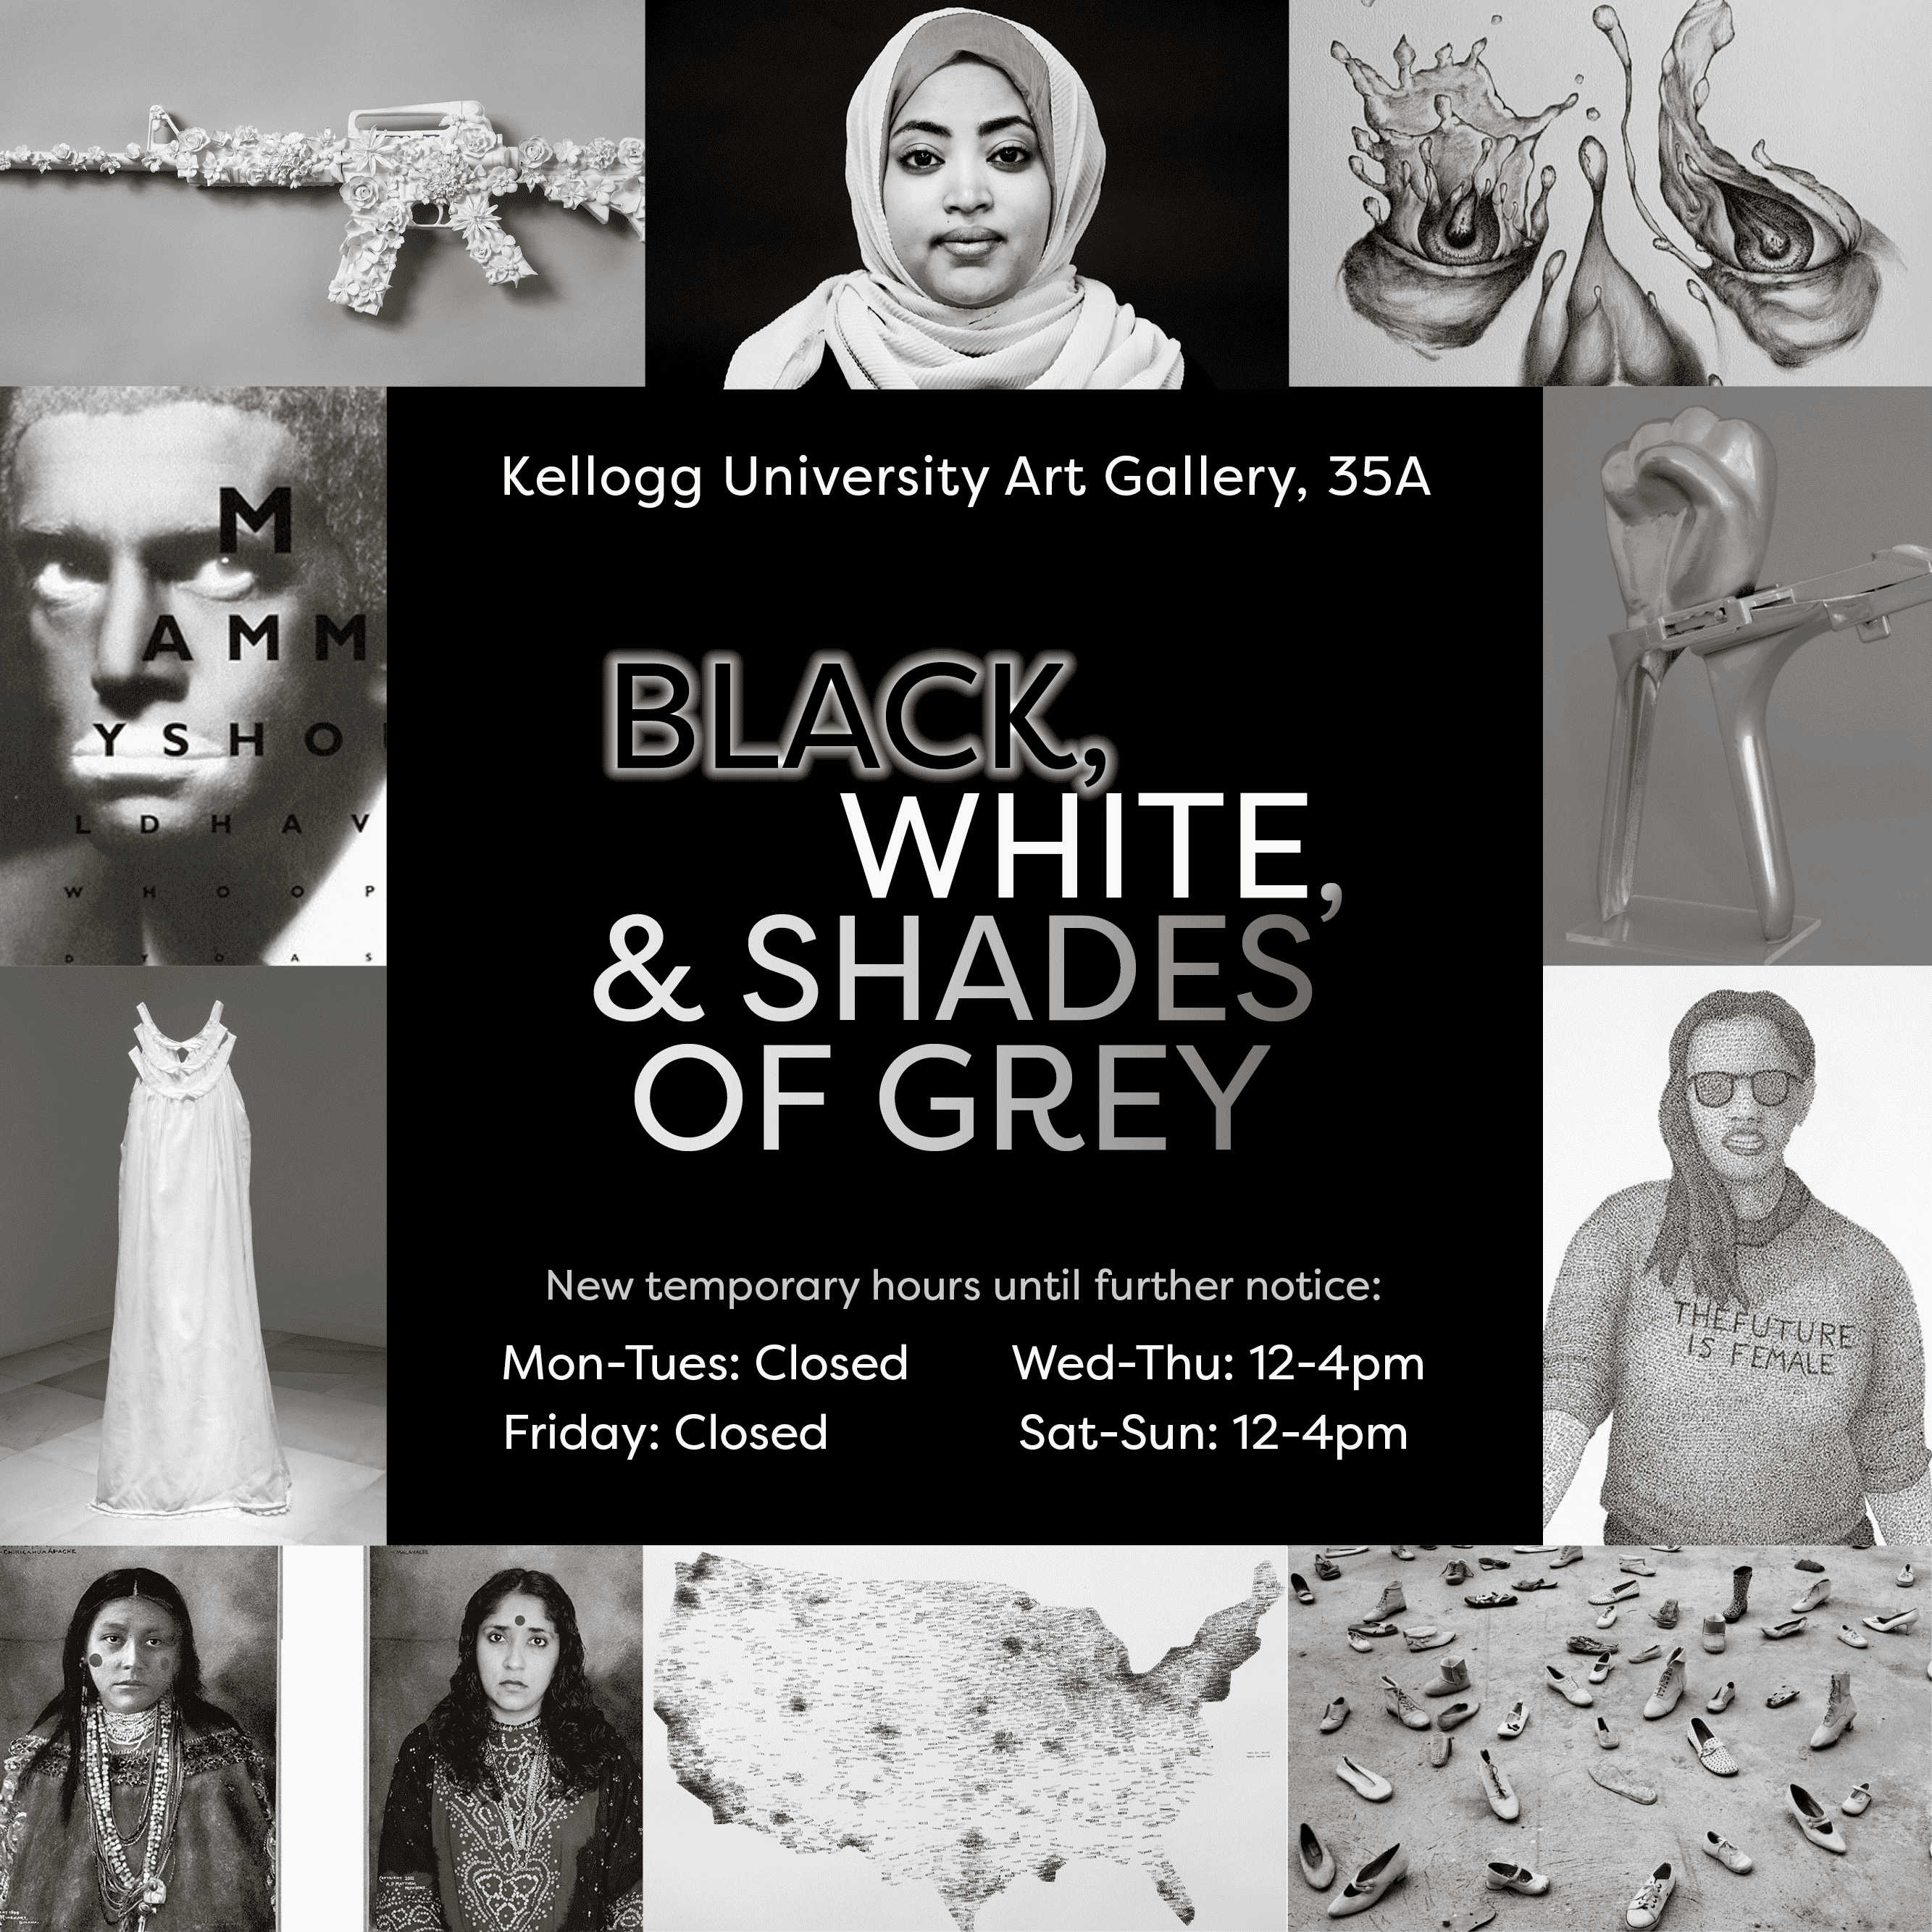 Black, White & Shades of Grey